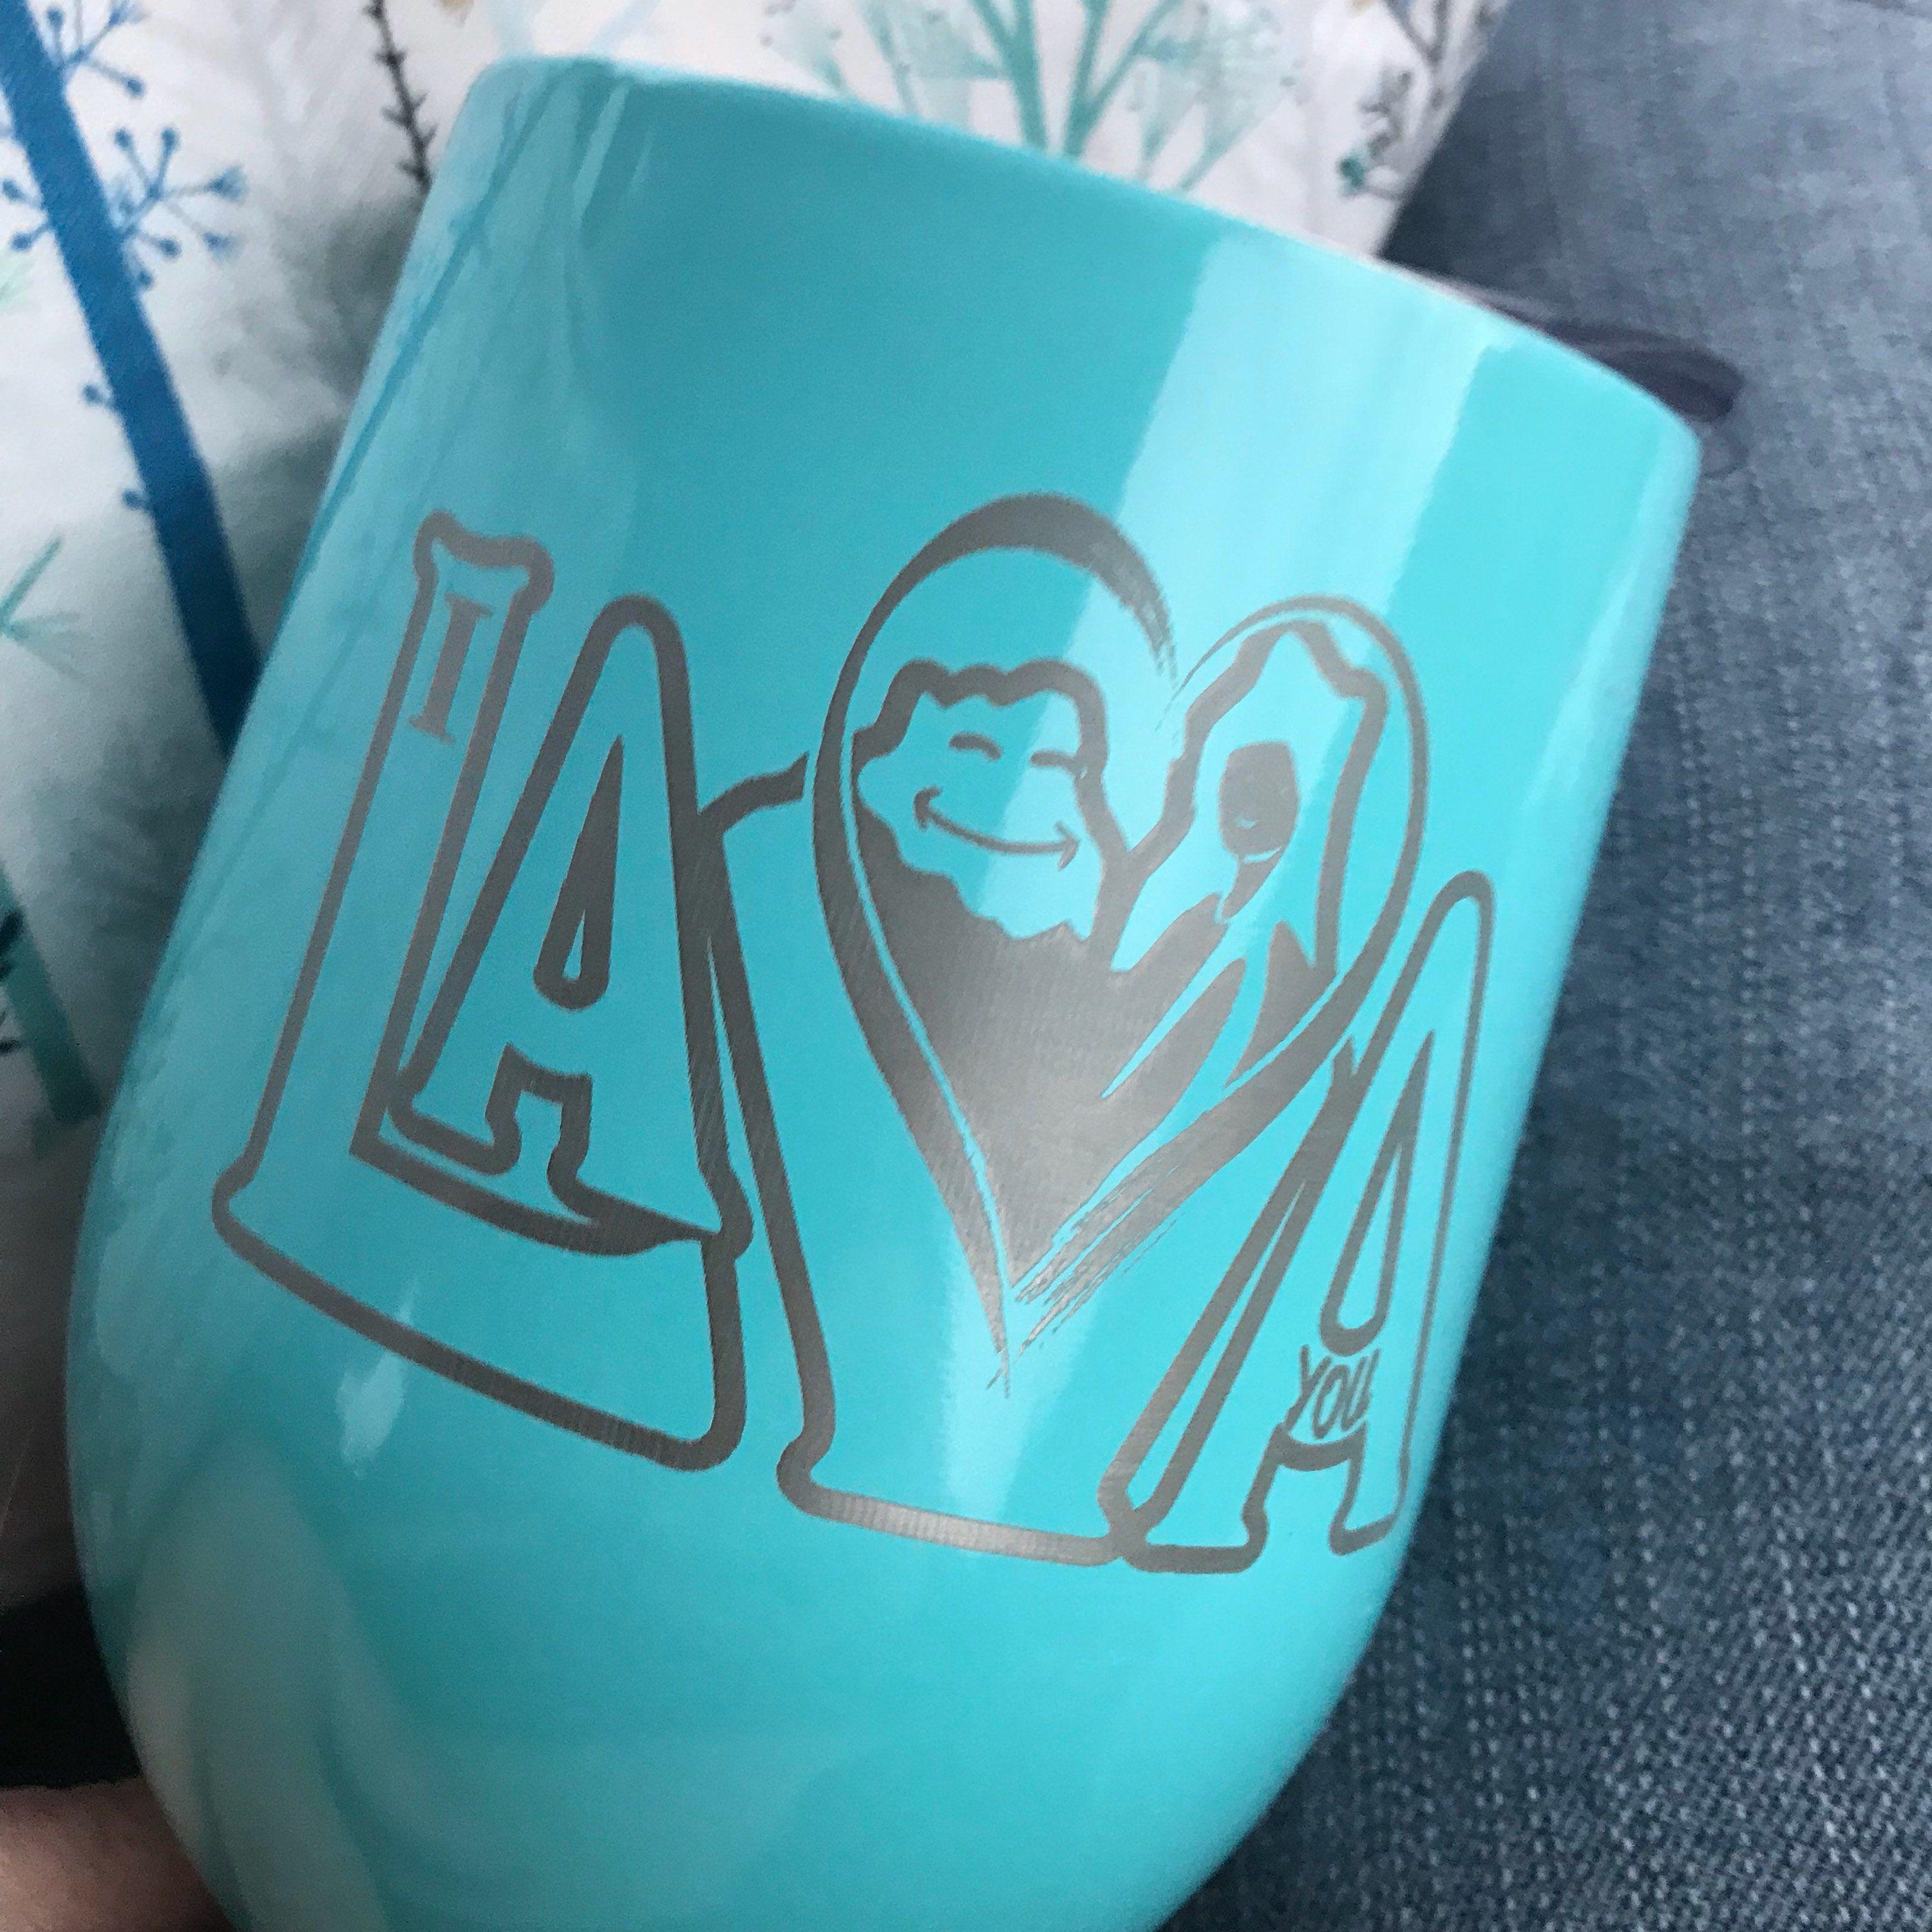 Disney Pixar Lava Logo - I Lava you. Personalized engraved travel mug. Travel Cup. powder